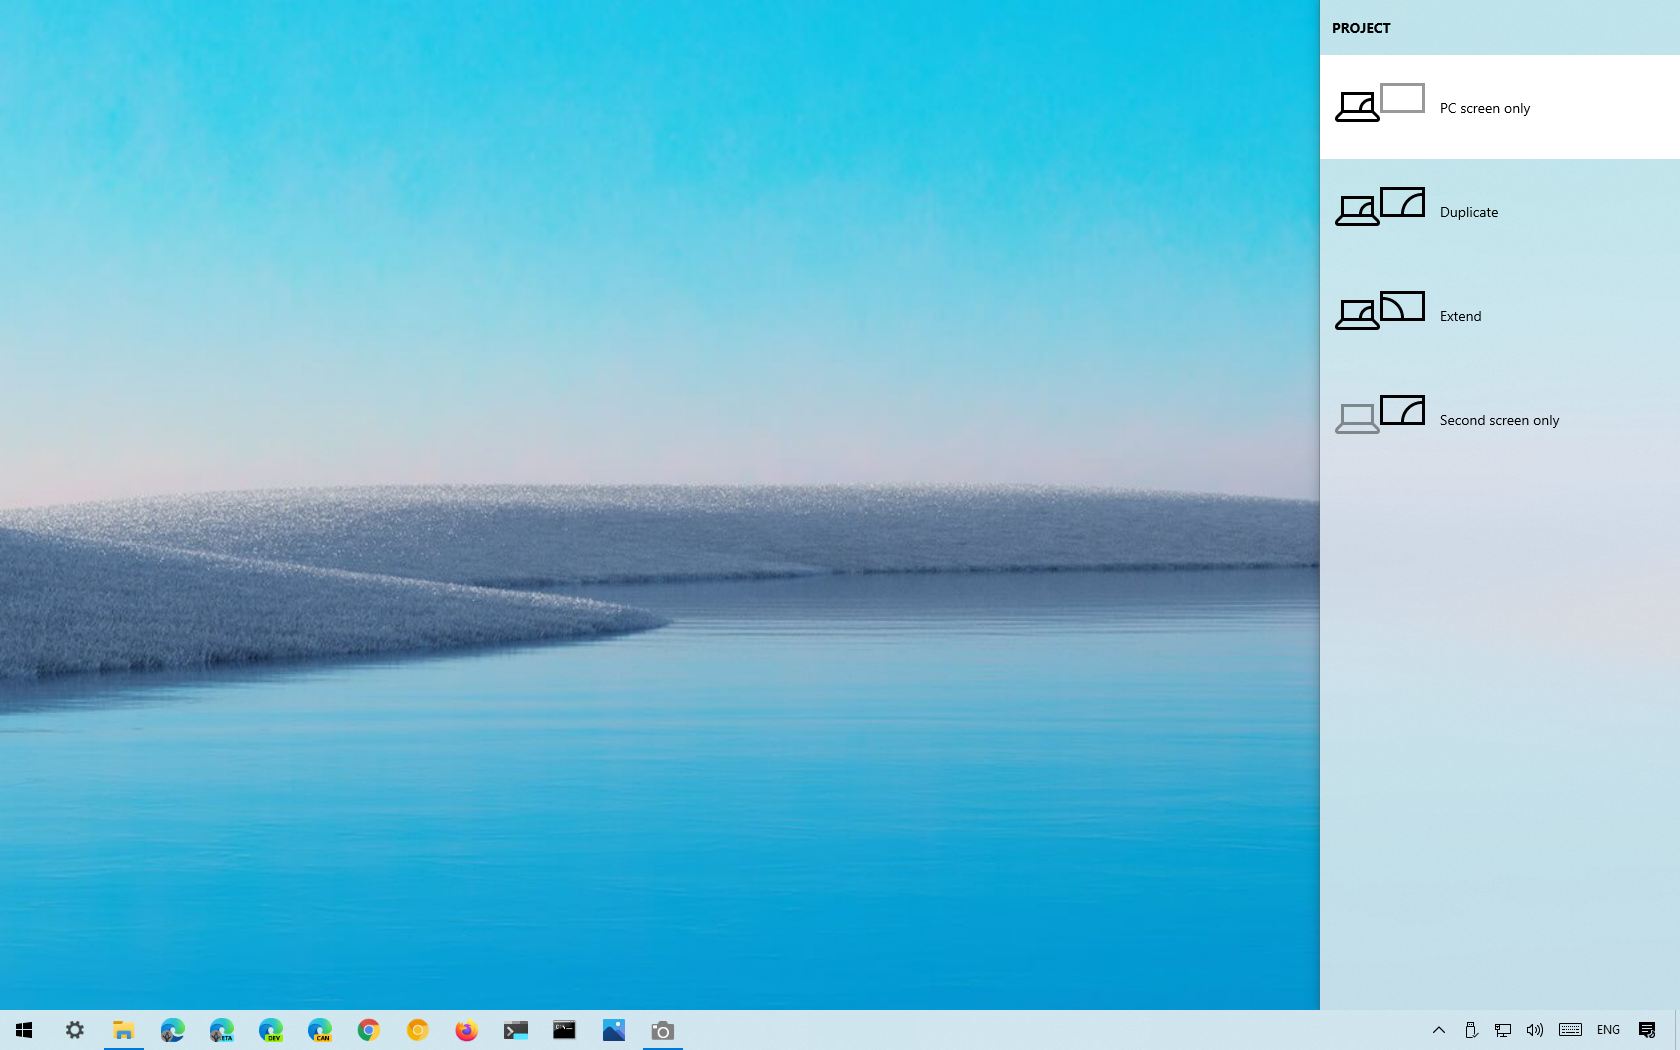 Windows 10 Project settings